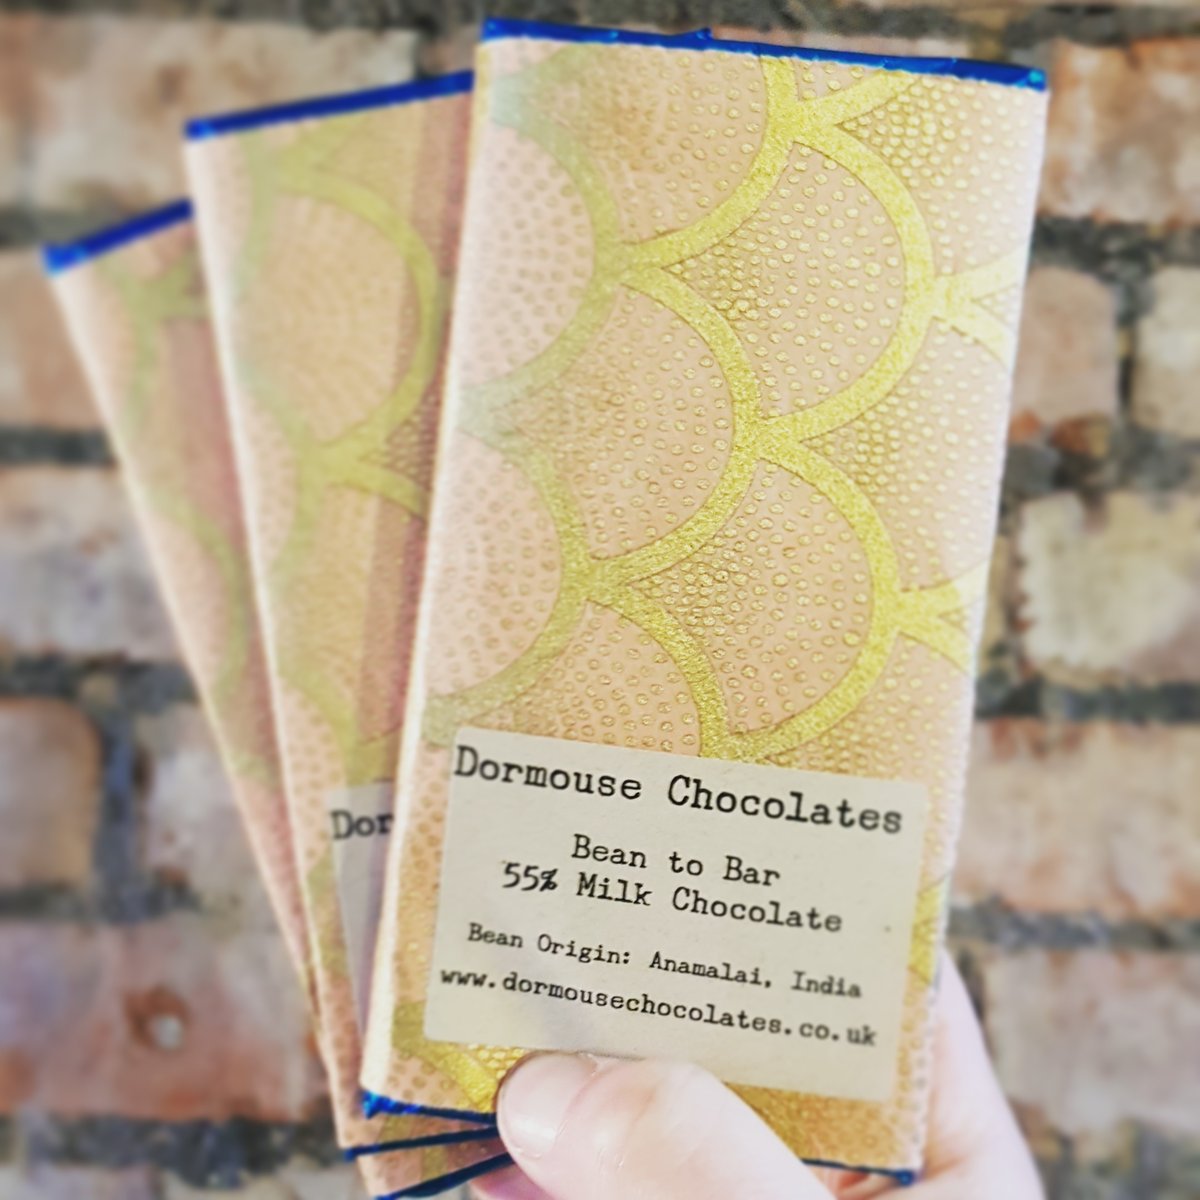 Dormouse Chocolates